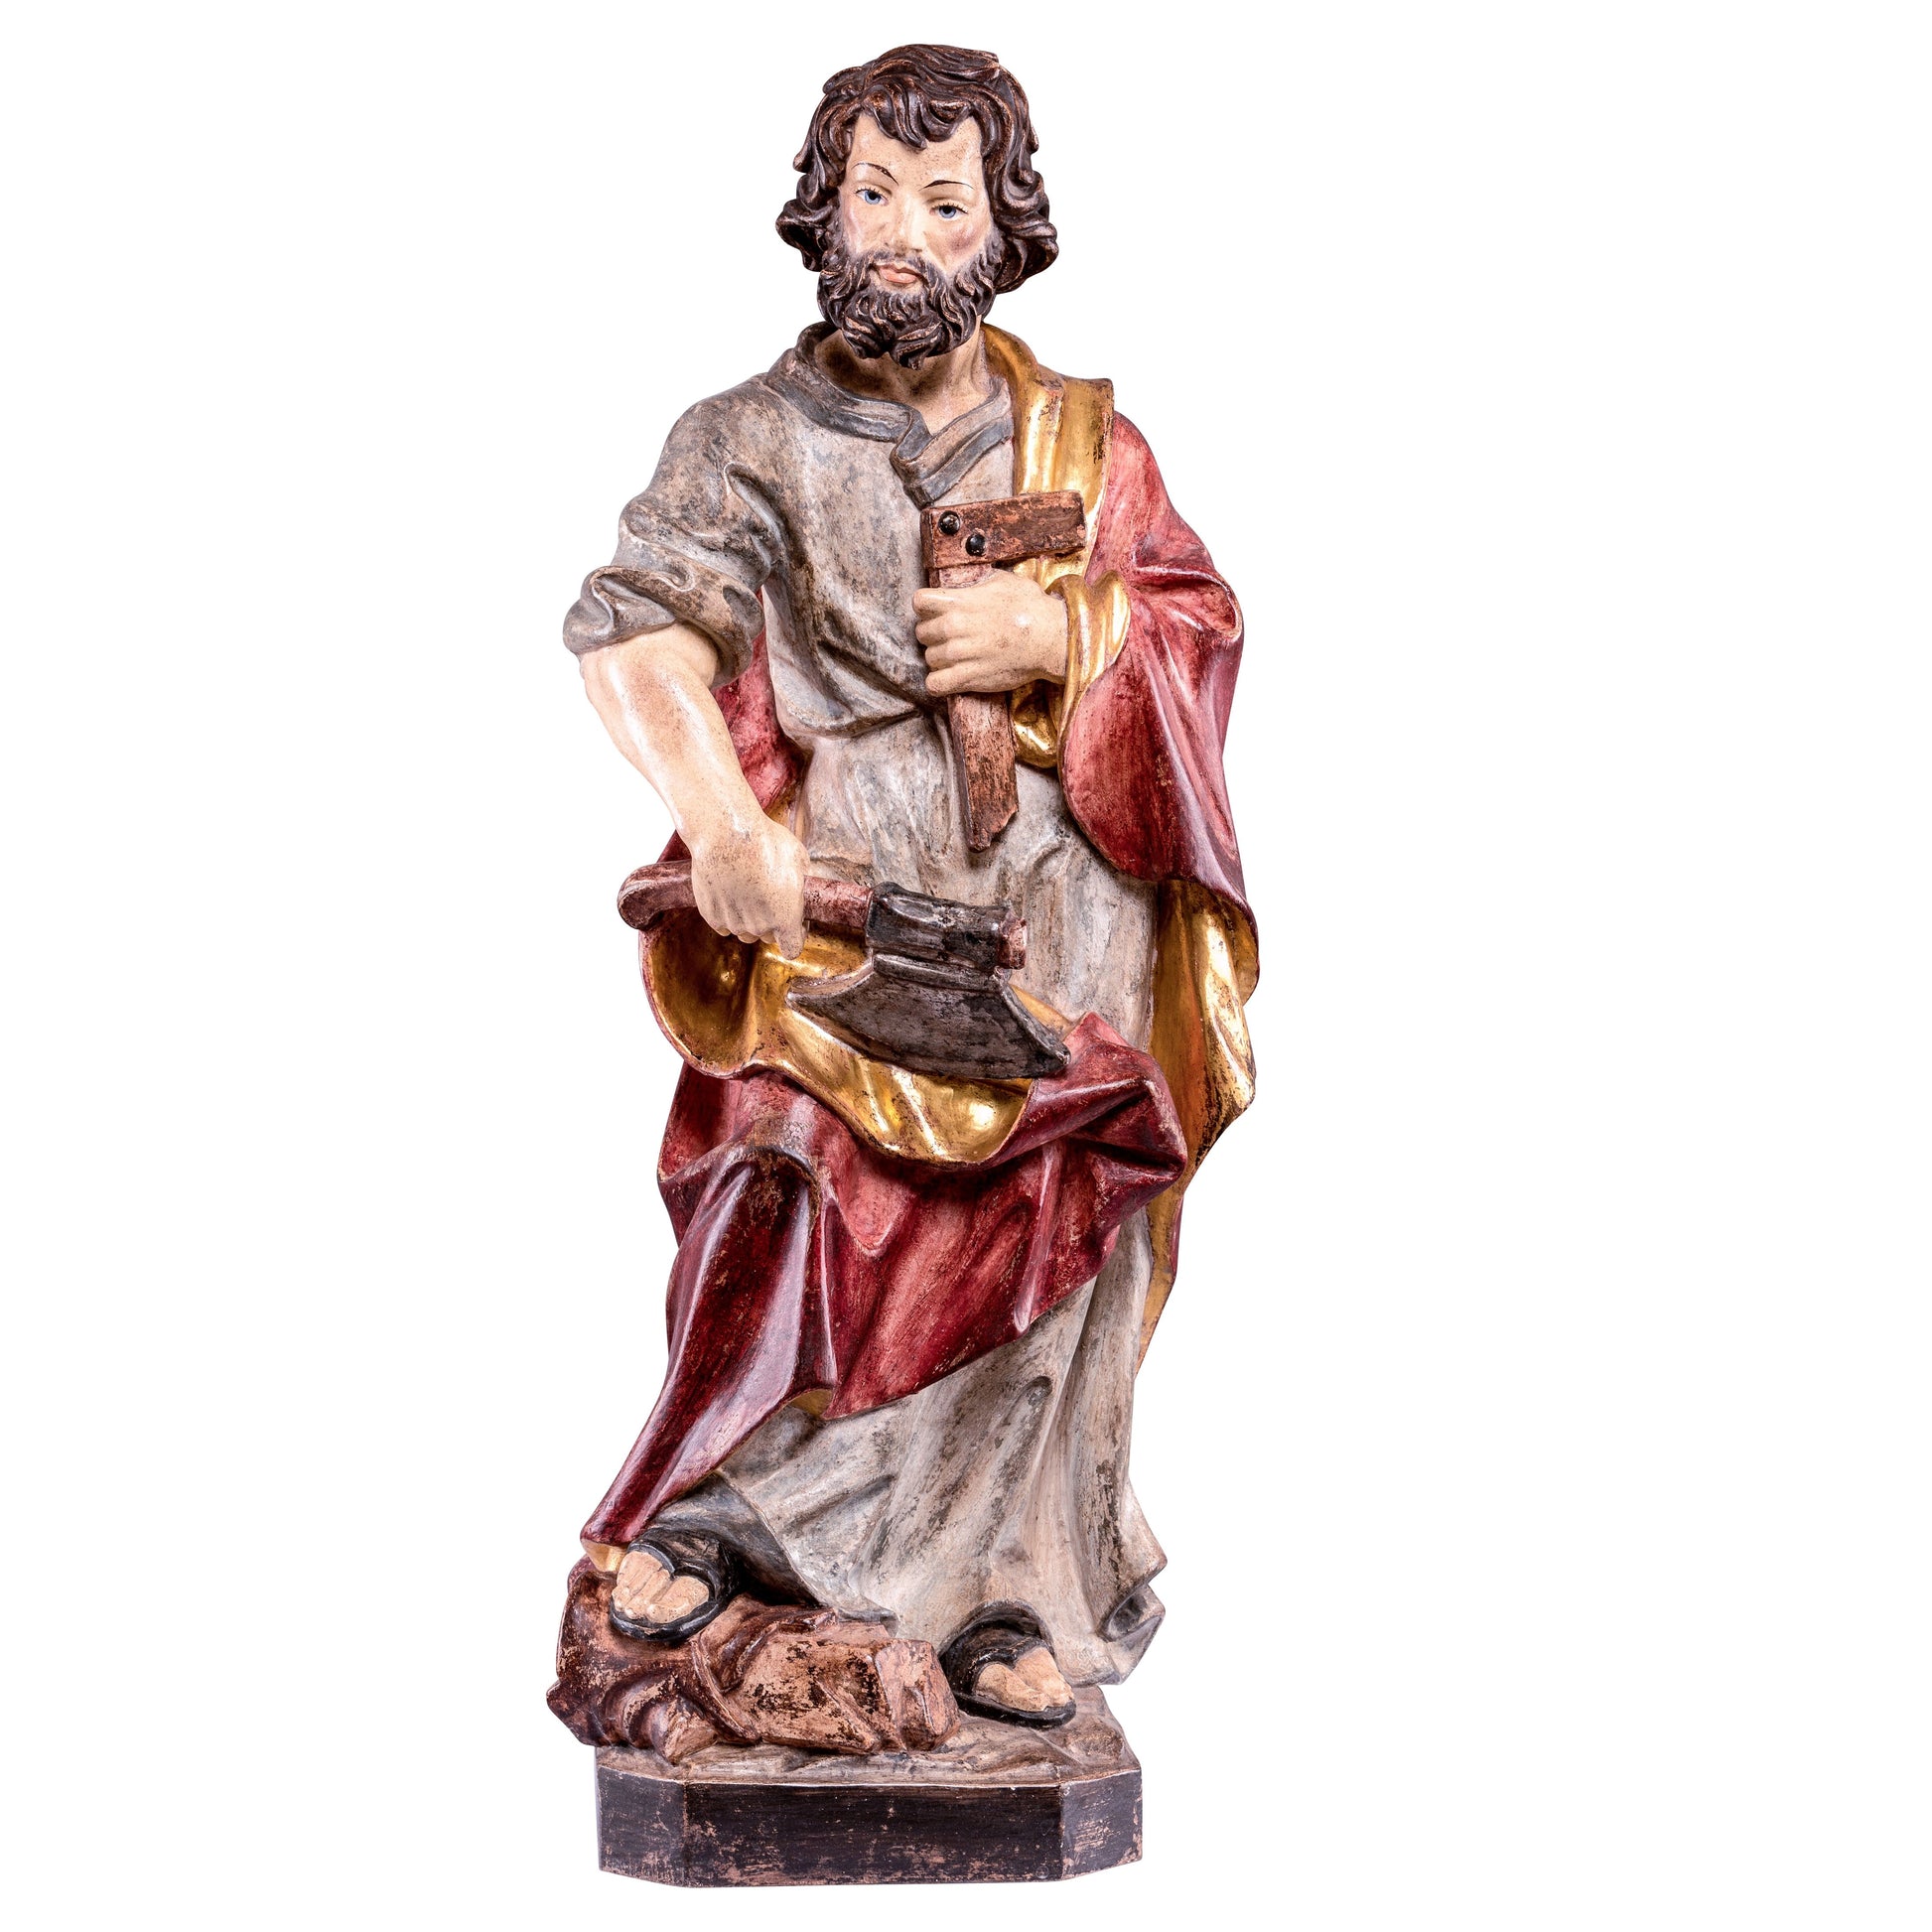 Mondo Cattolico Golden / 30 cm (11.8 in) Wooden statue of St. Joseph the carpenter